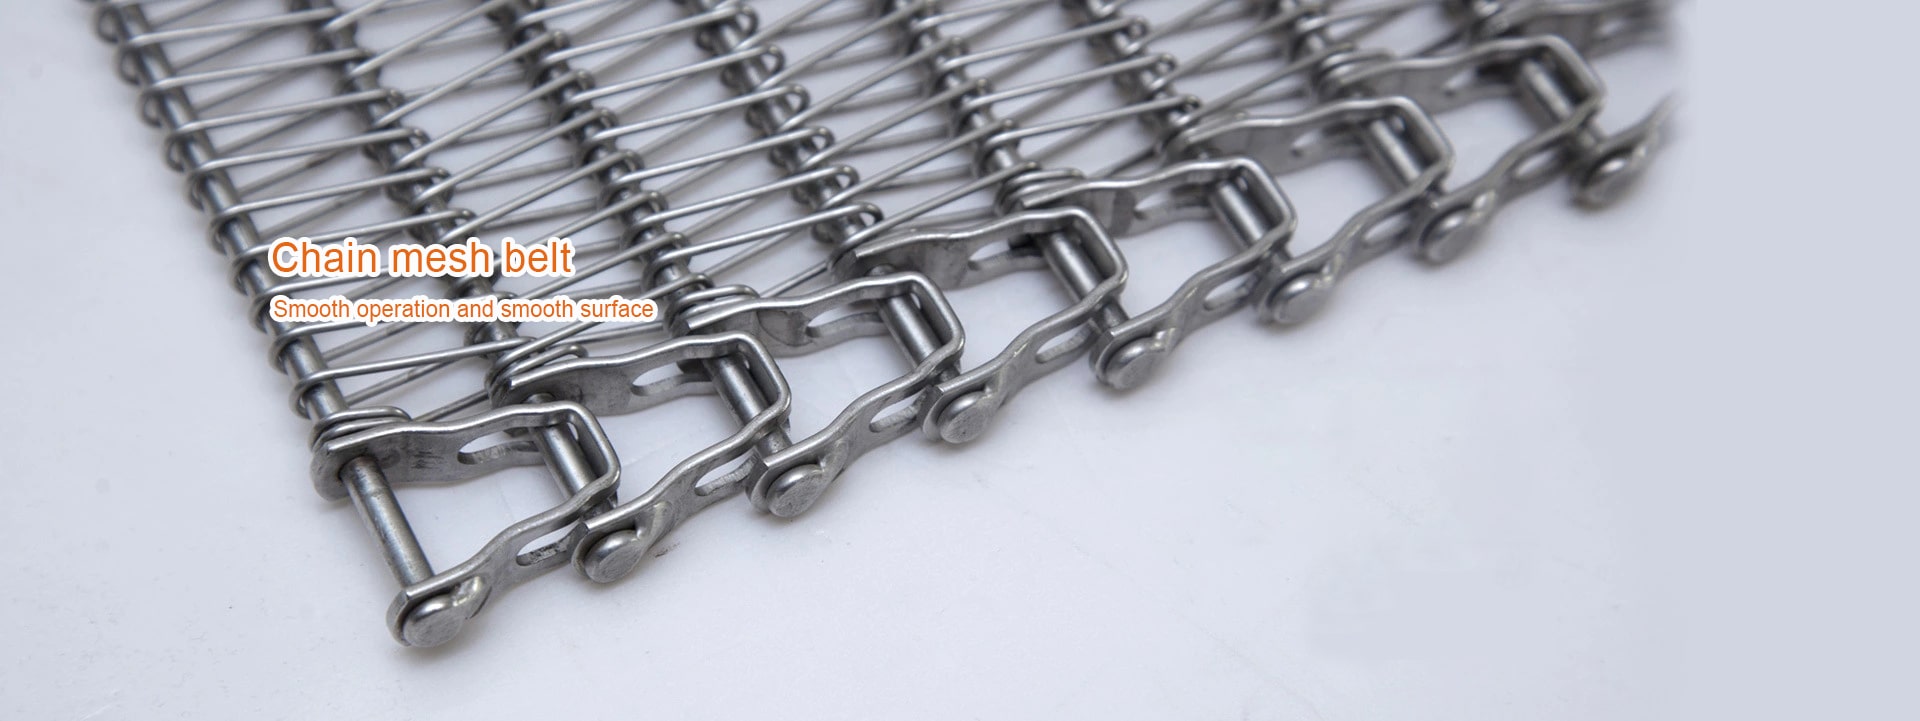 Chain mesh belt